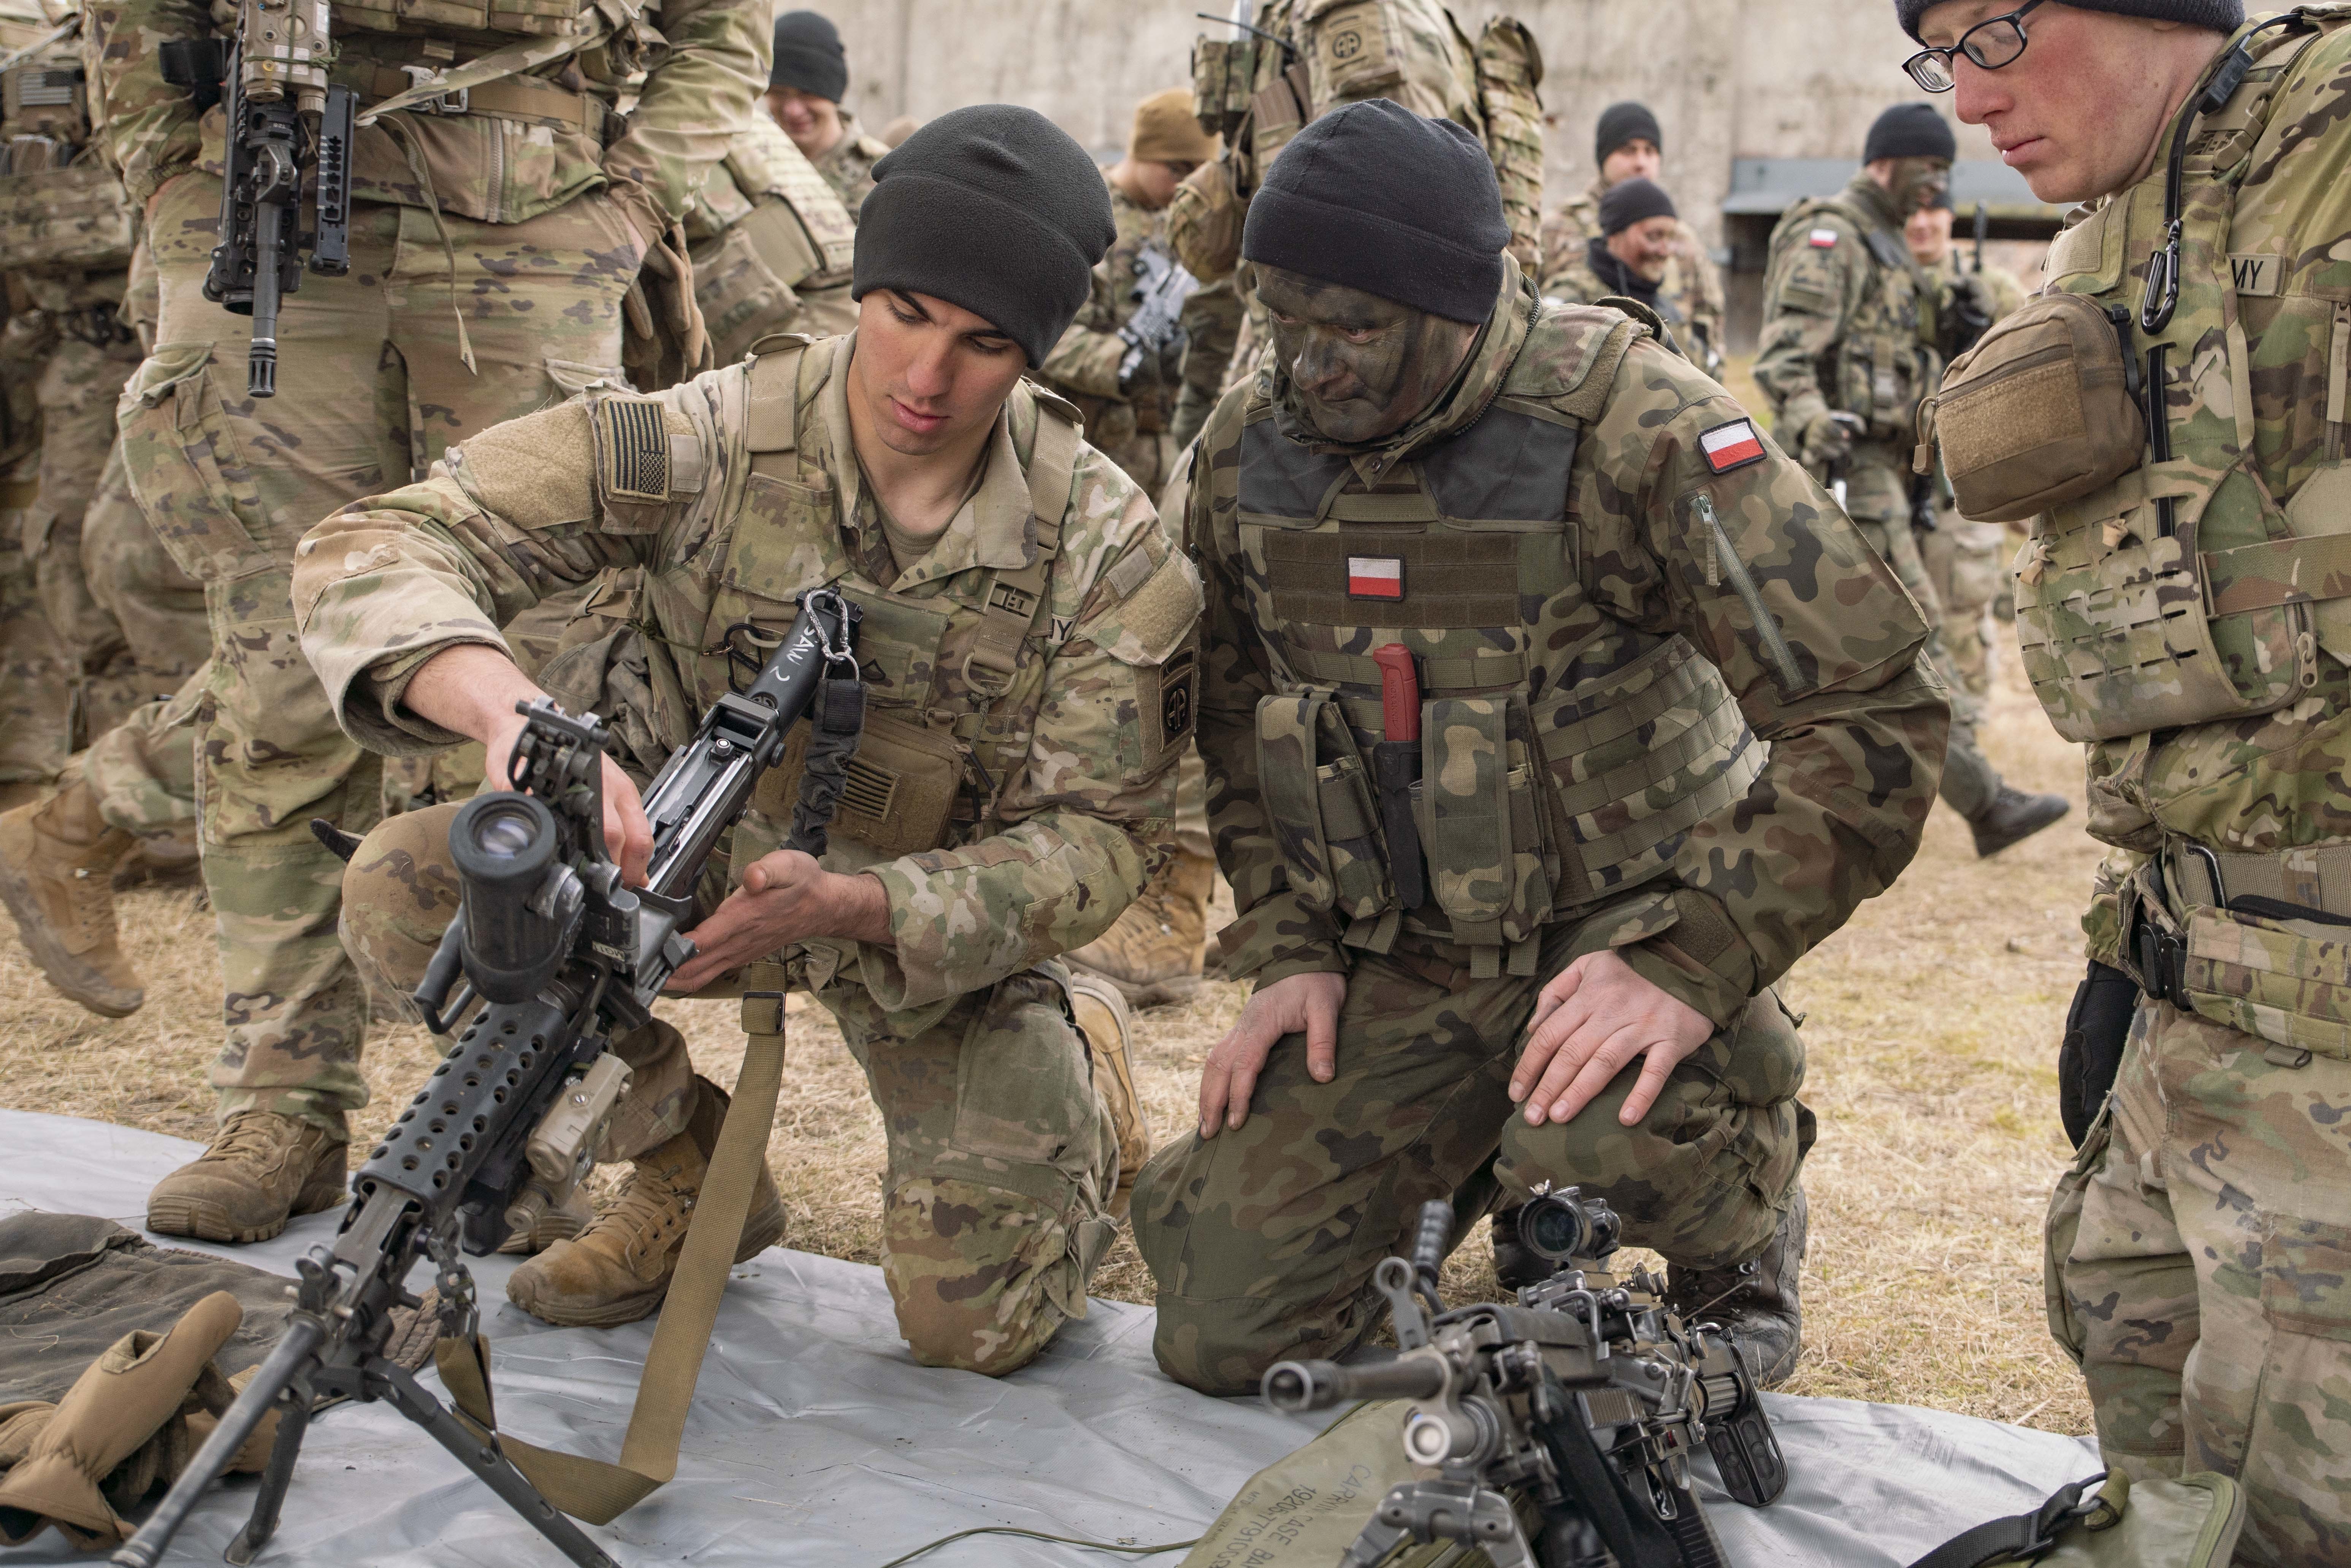 More U.S. troops deploying to Europe, Guard leaving Ukraine